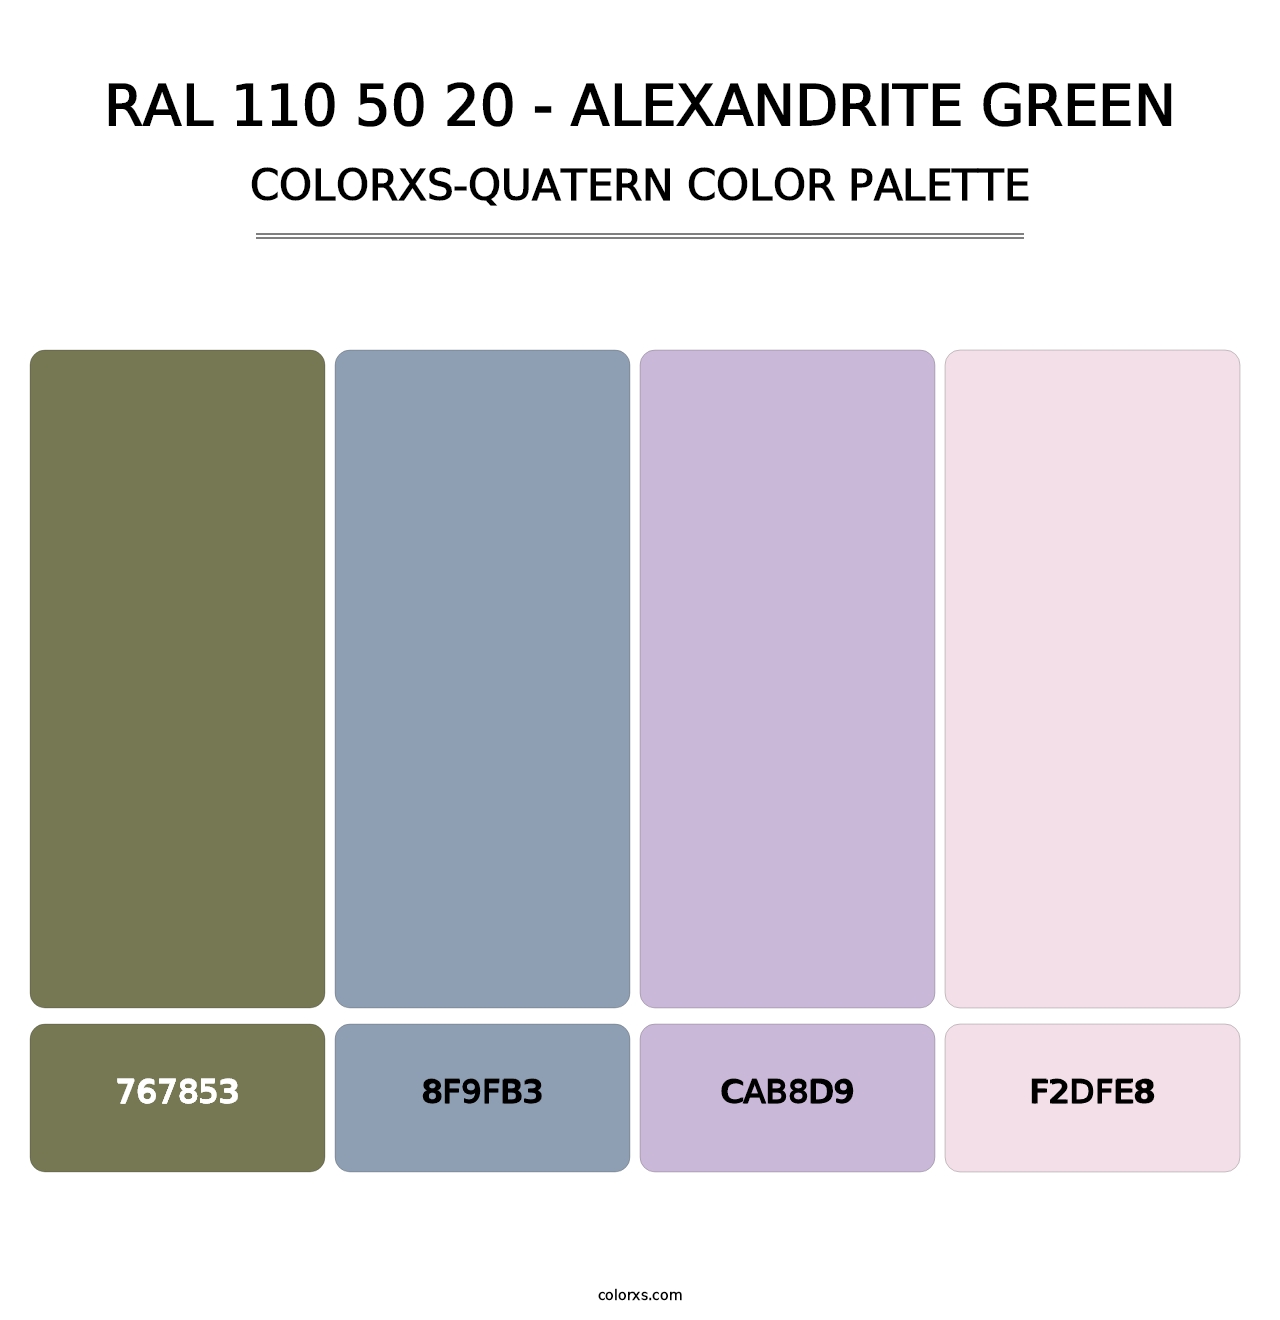 RAL 110 50 20 - Alexandrite Green - Colorxs Quatern Palette